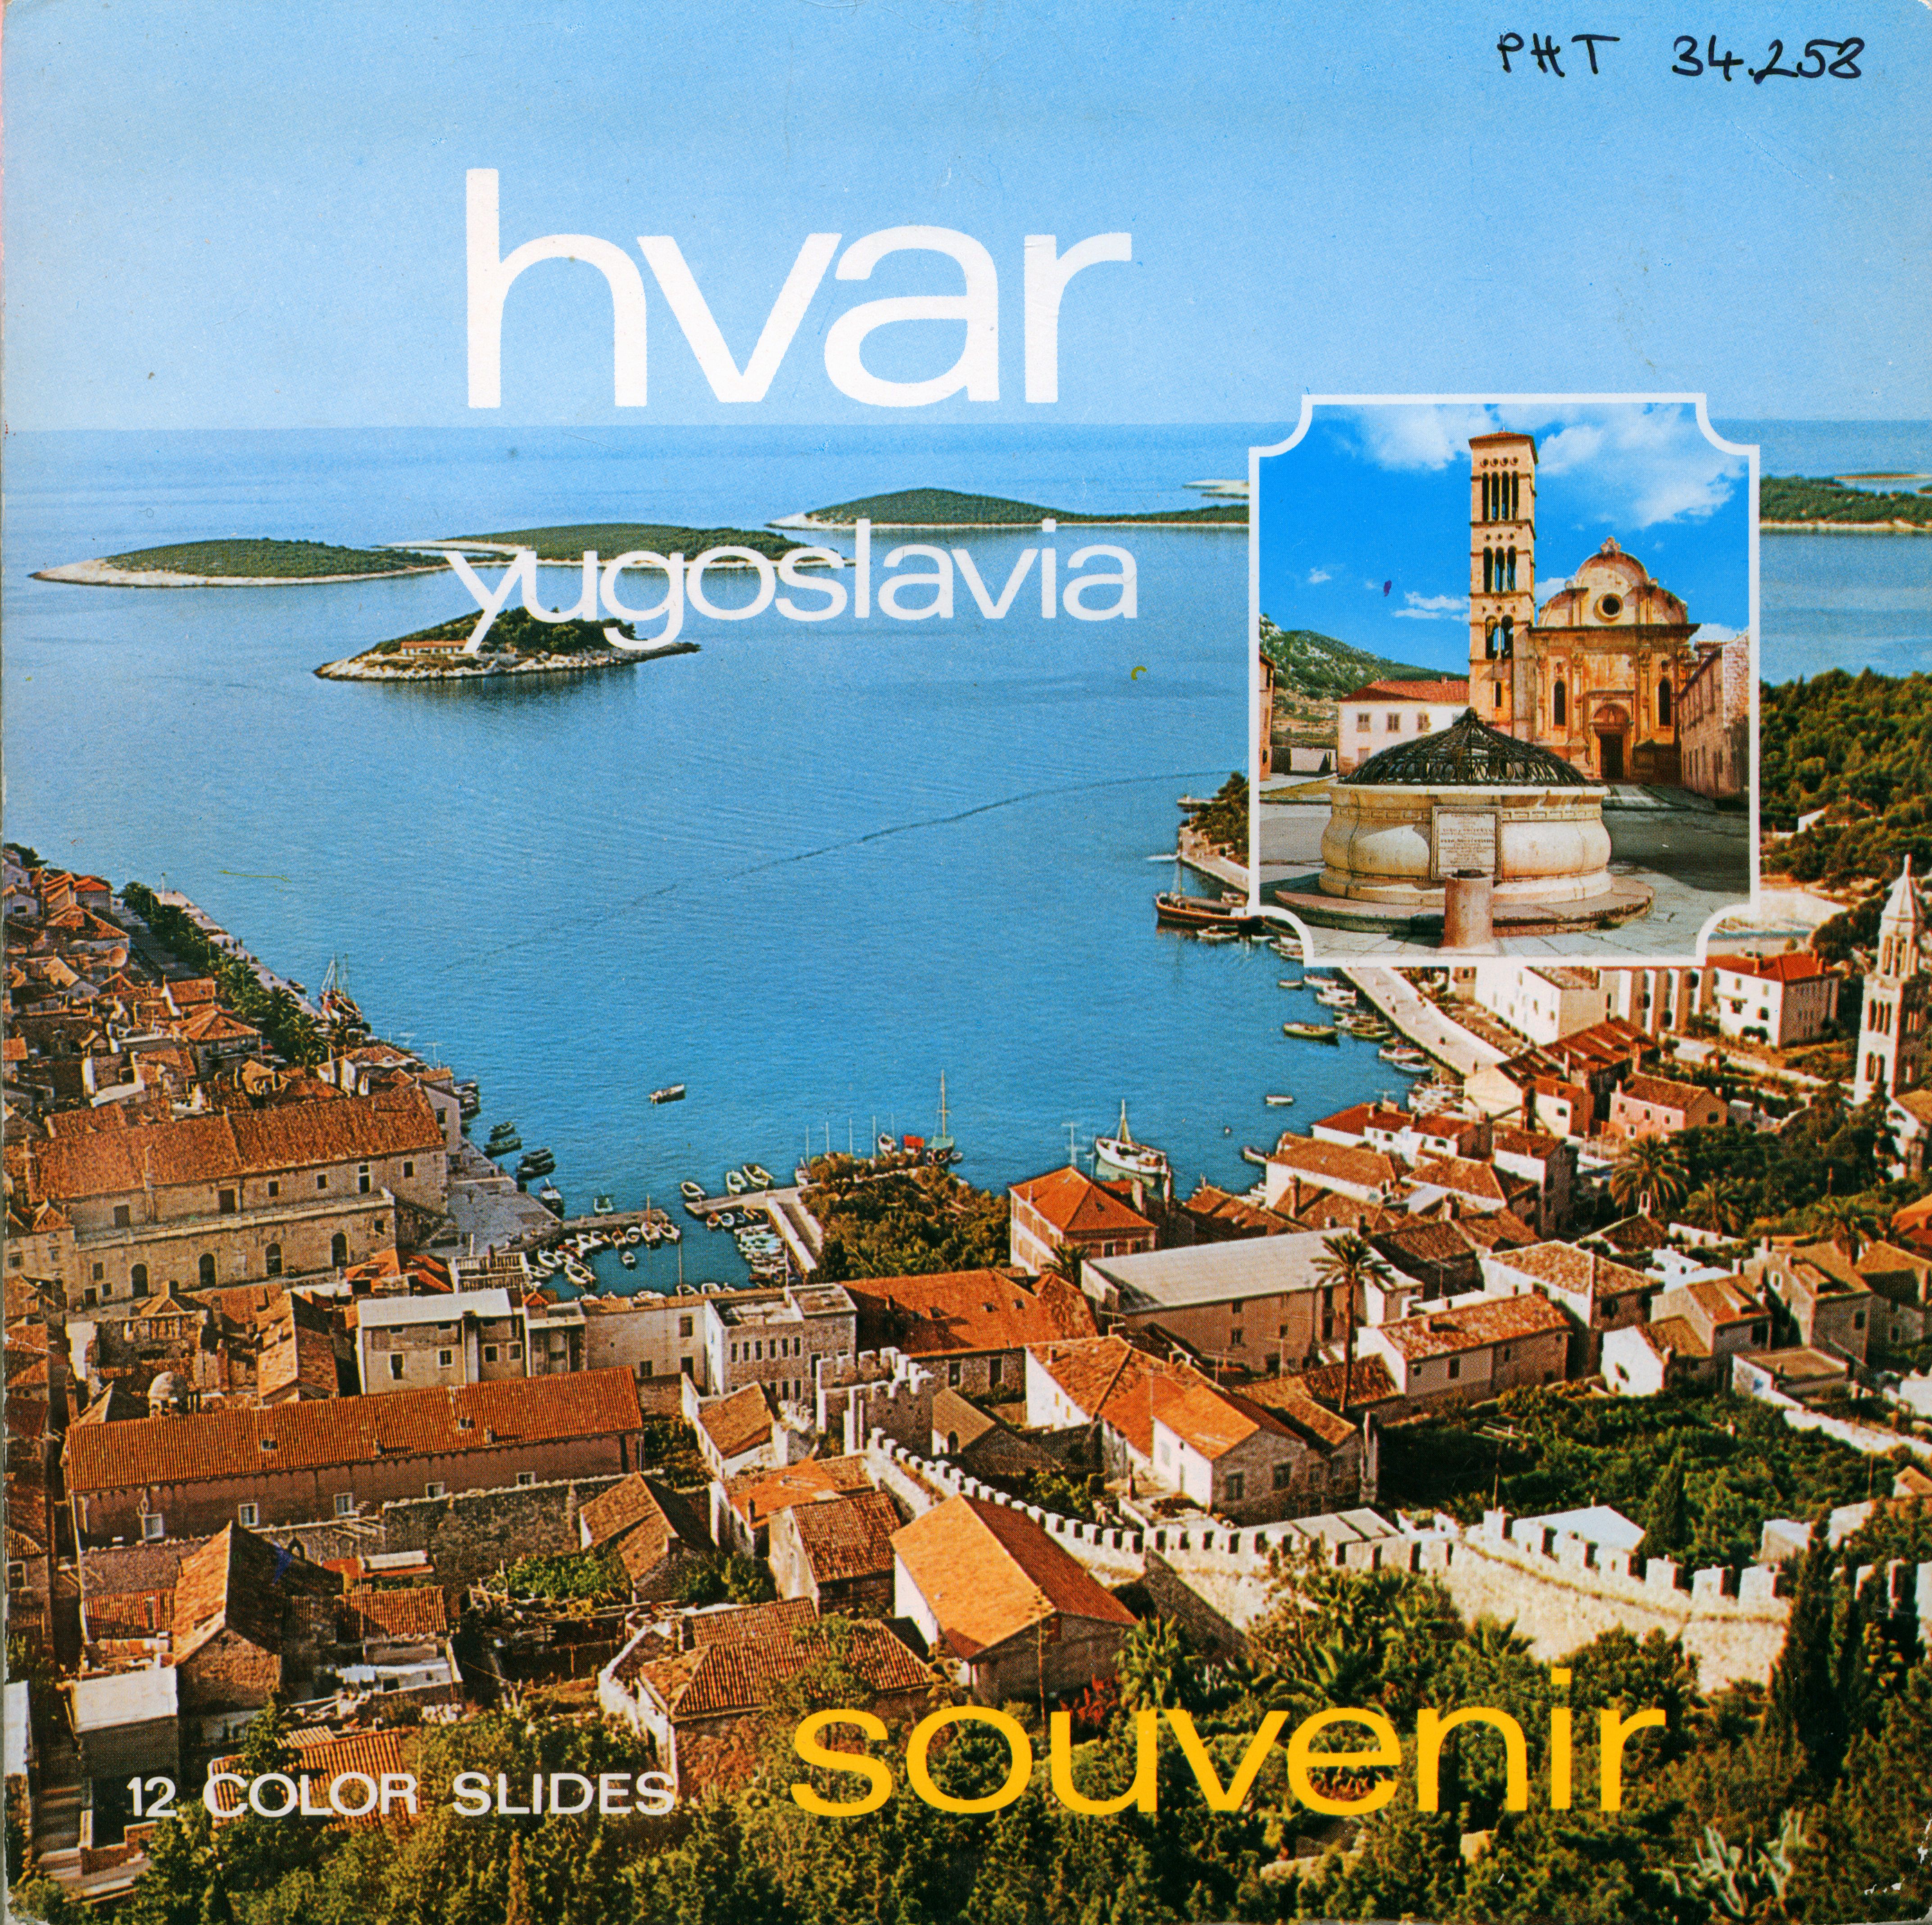 Hvar, Jugoslavia Souvenir, 12 color slides